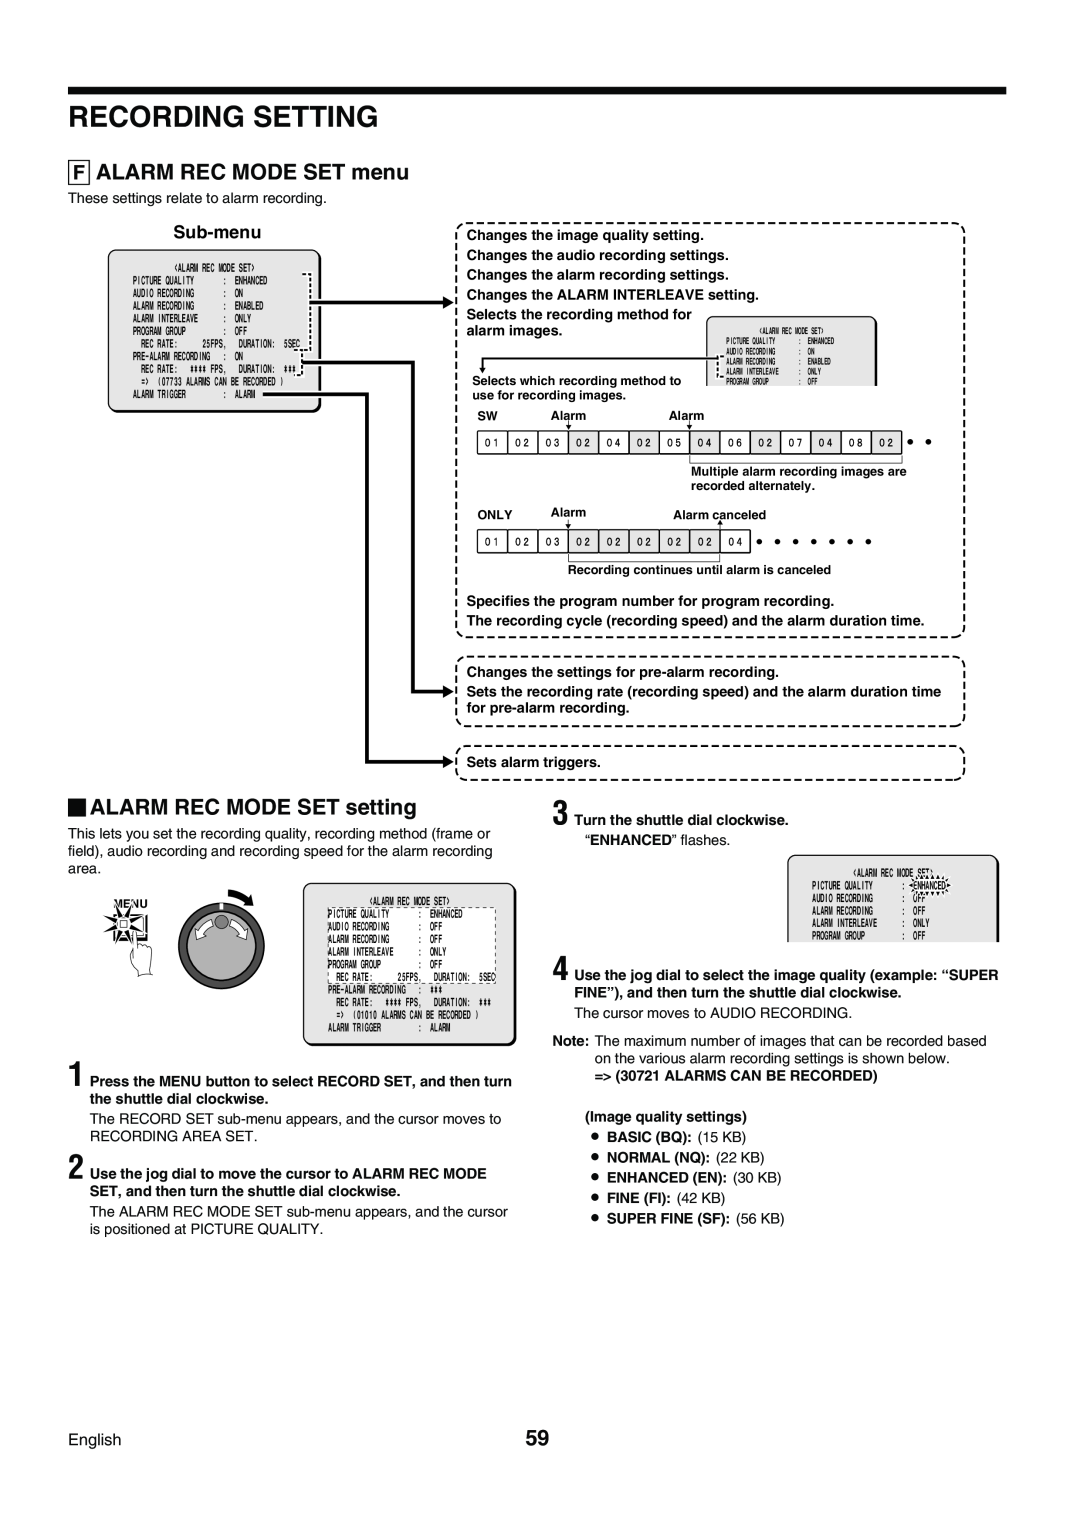 Sanyo DSR-3009P instruction manual ALARM REC MODE SET menu, ALARM REC MODE SET setting, Recording Setting, Sub-menu 